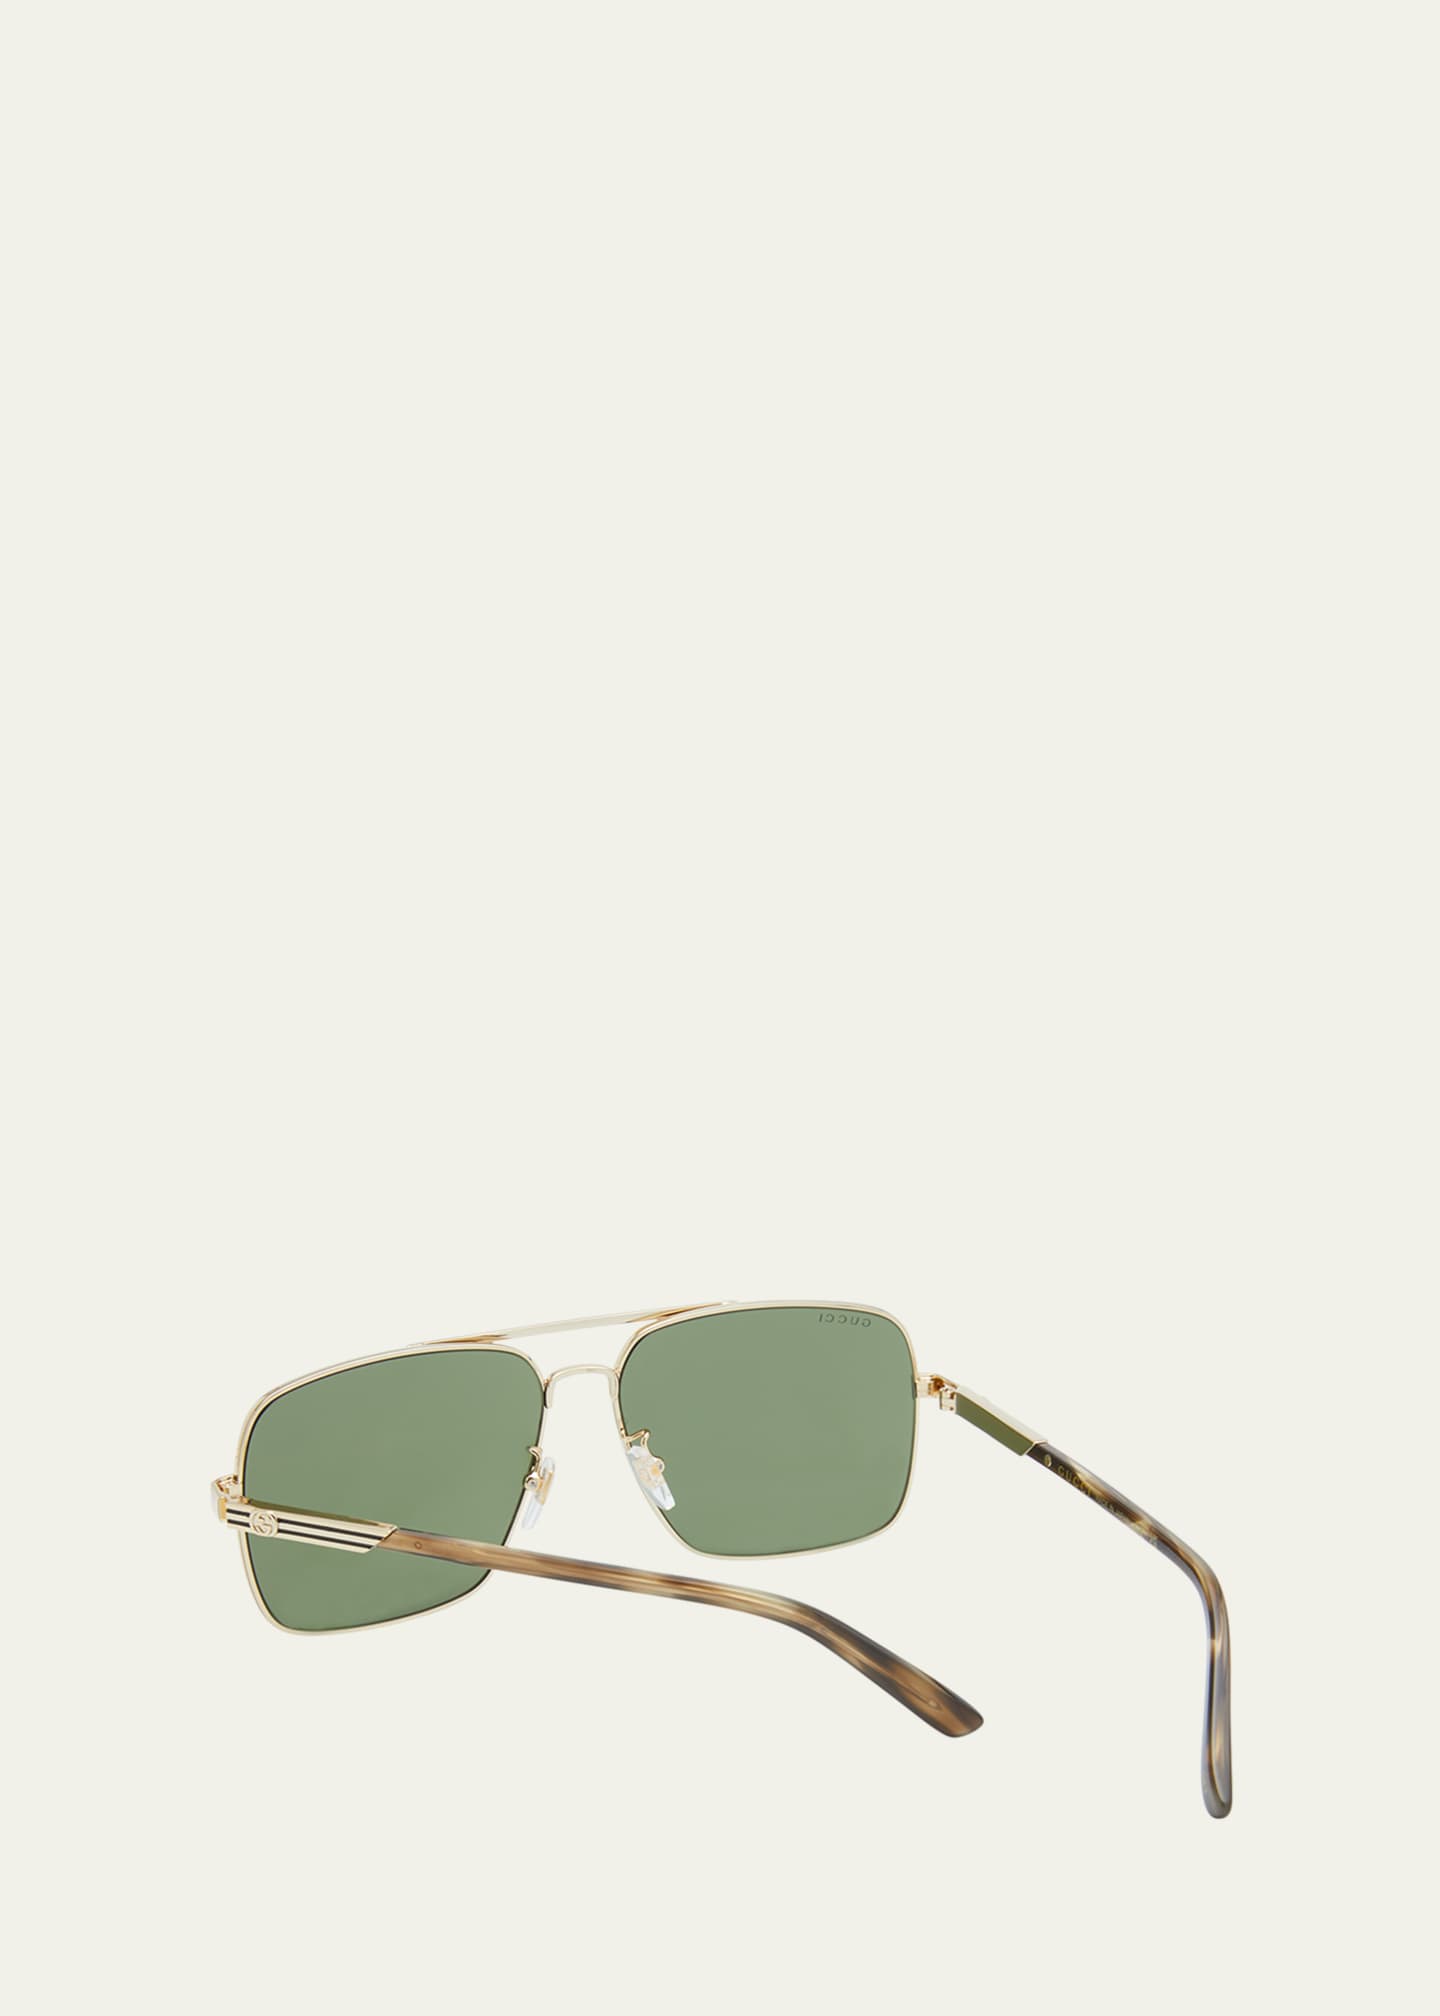 Gucci Green Aviator Sunglasses